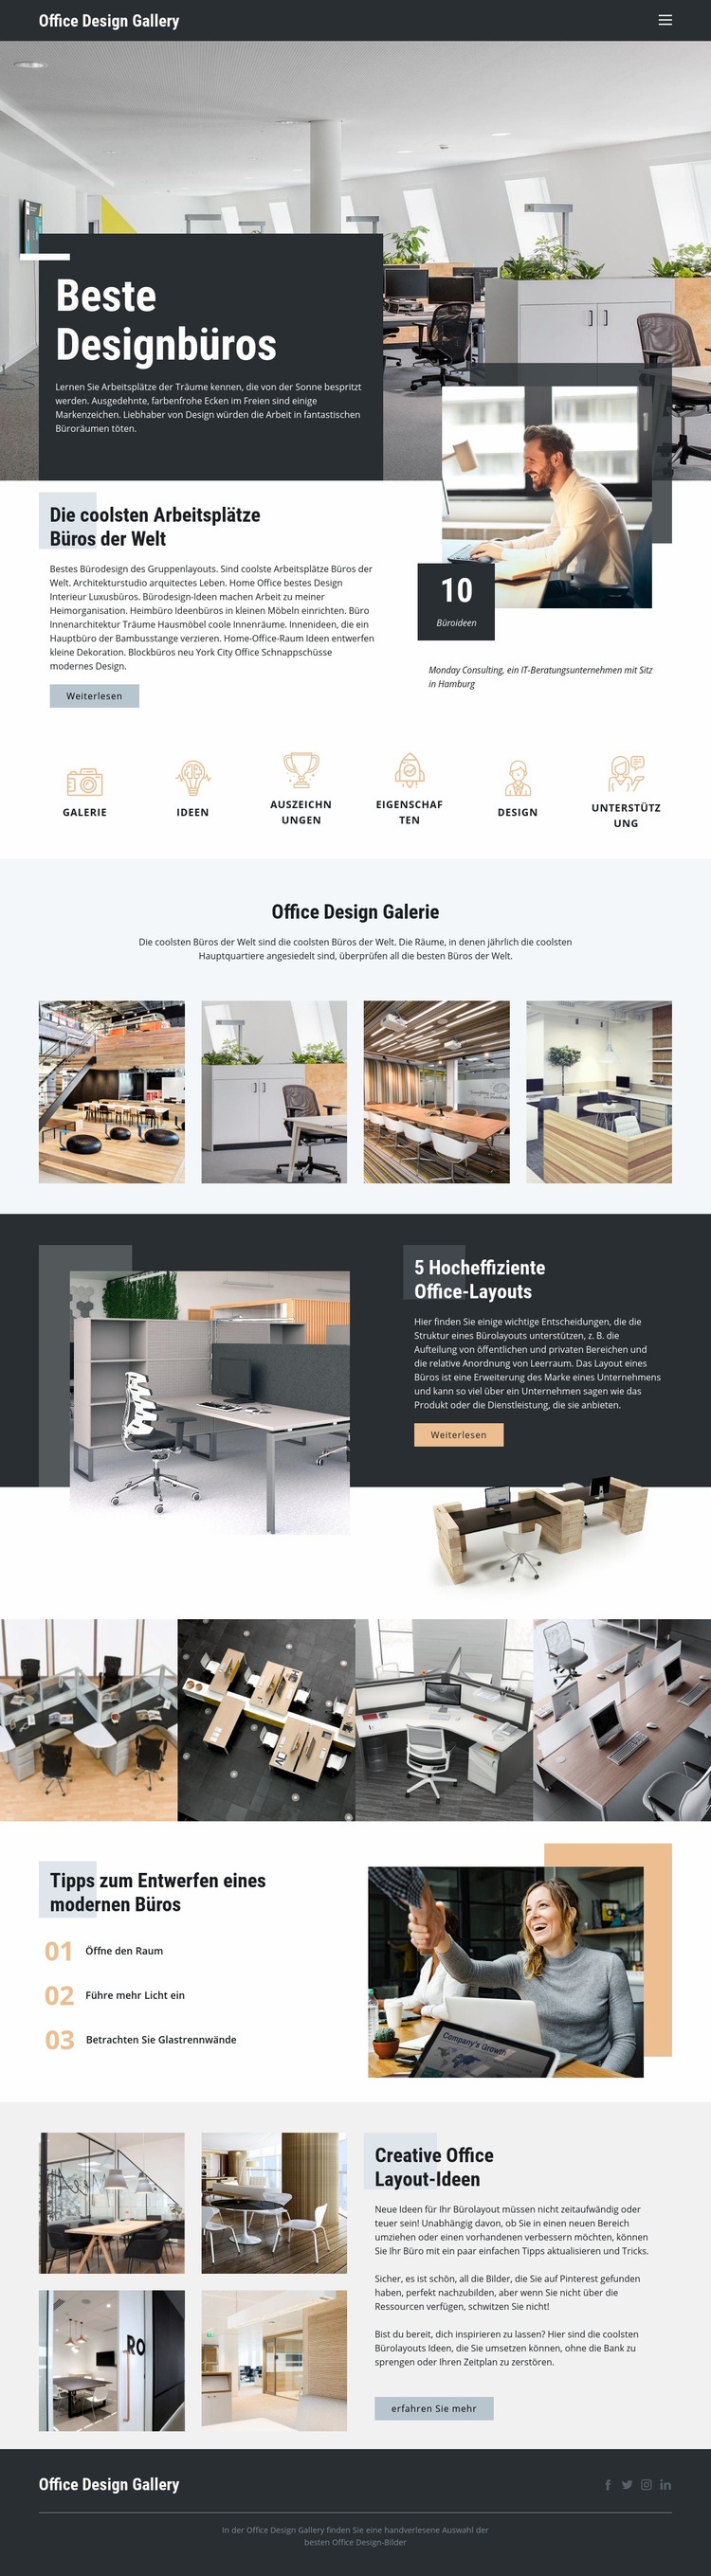 Beste Designbüros Website design